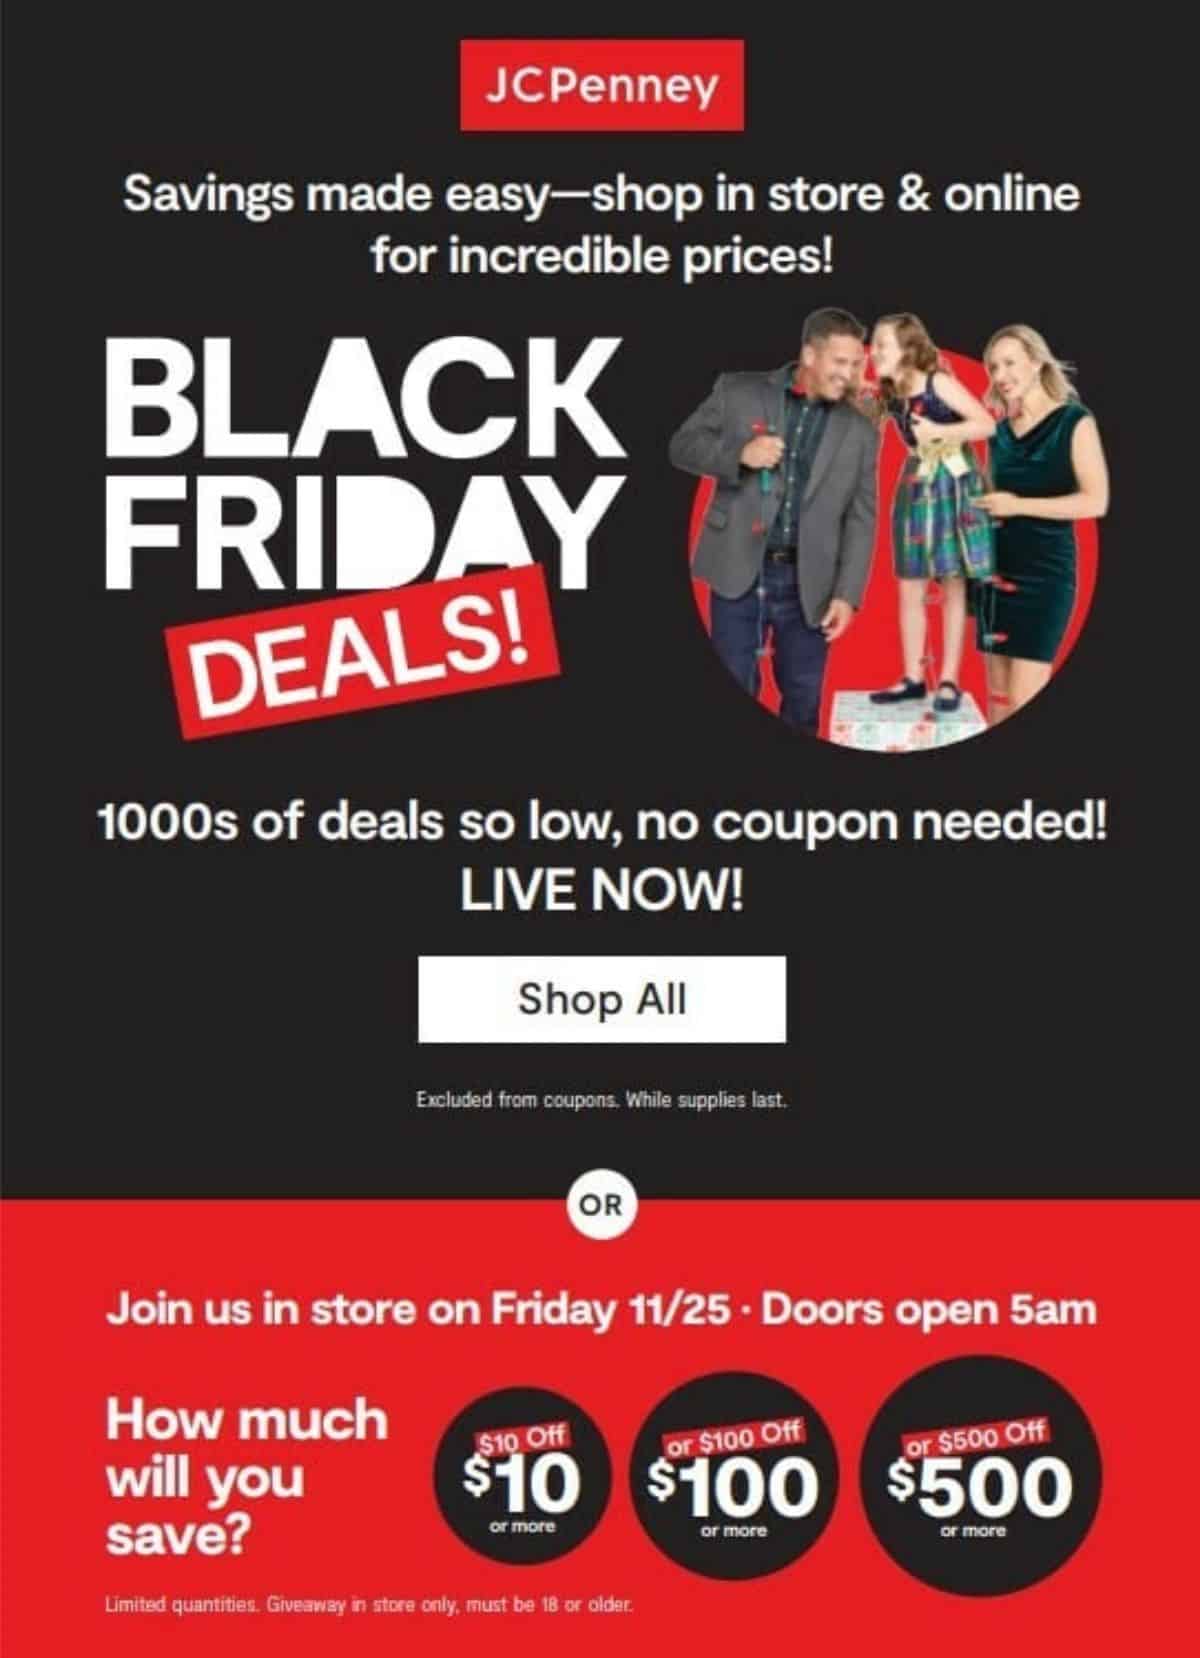 JCPenny Black Friday Sales Saving Dollars and Sense